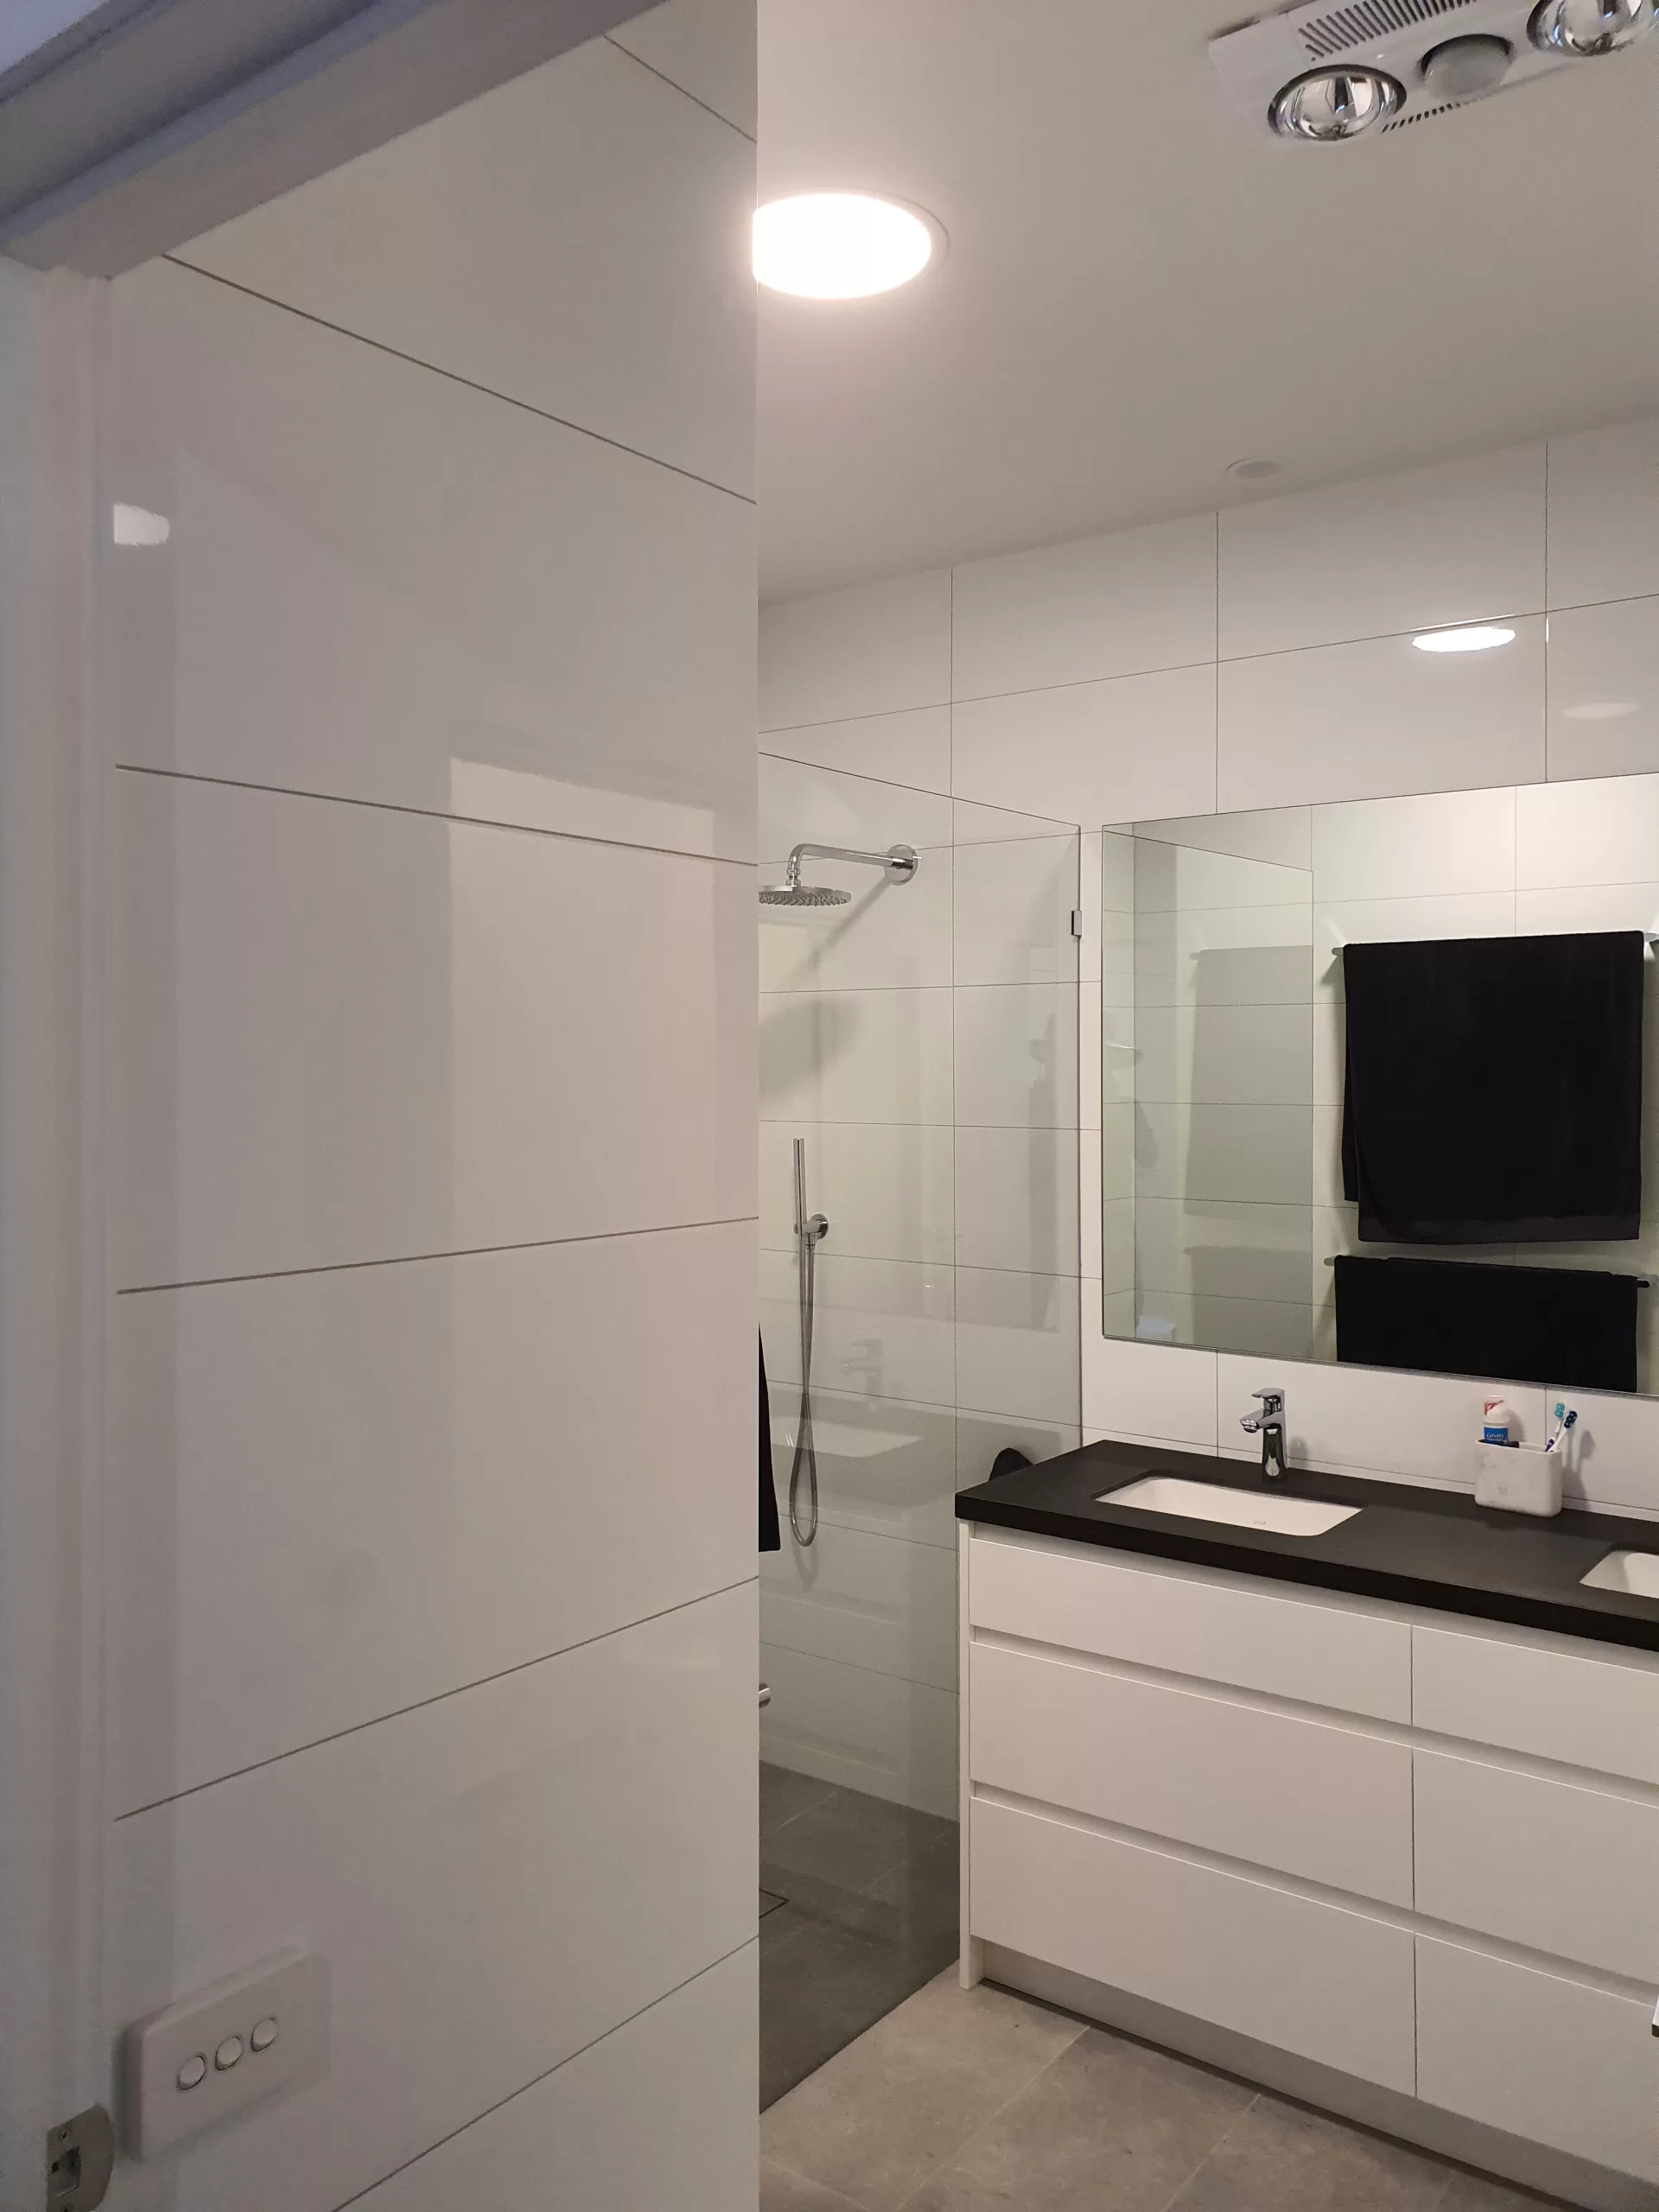 SLW3-225 - Bathroom - Peninsula install #4